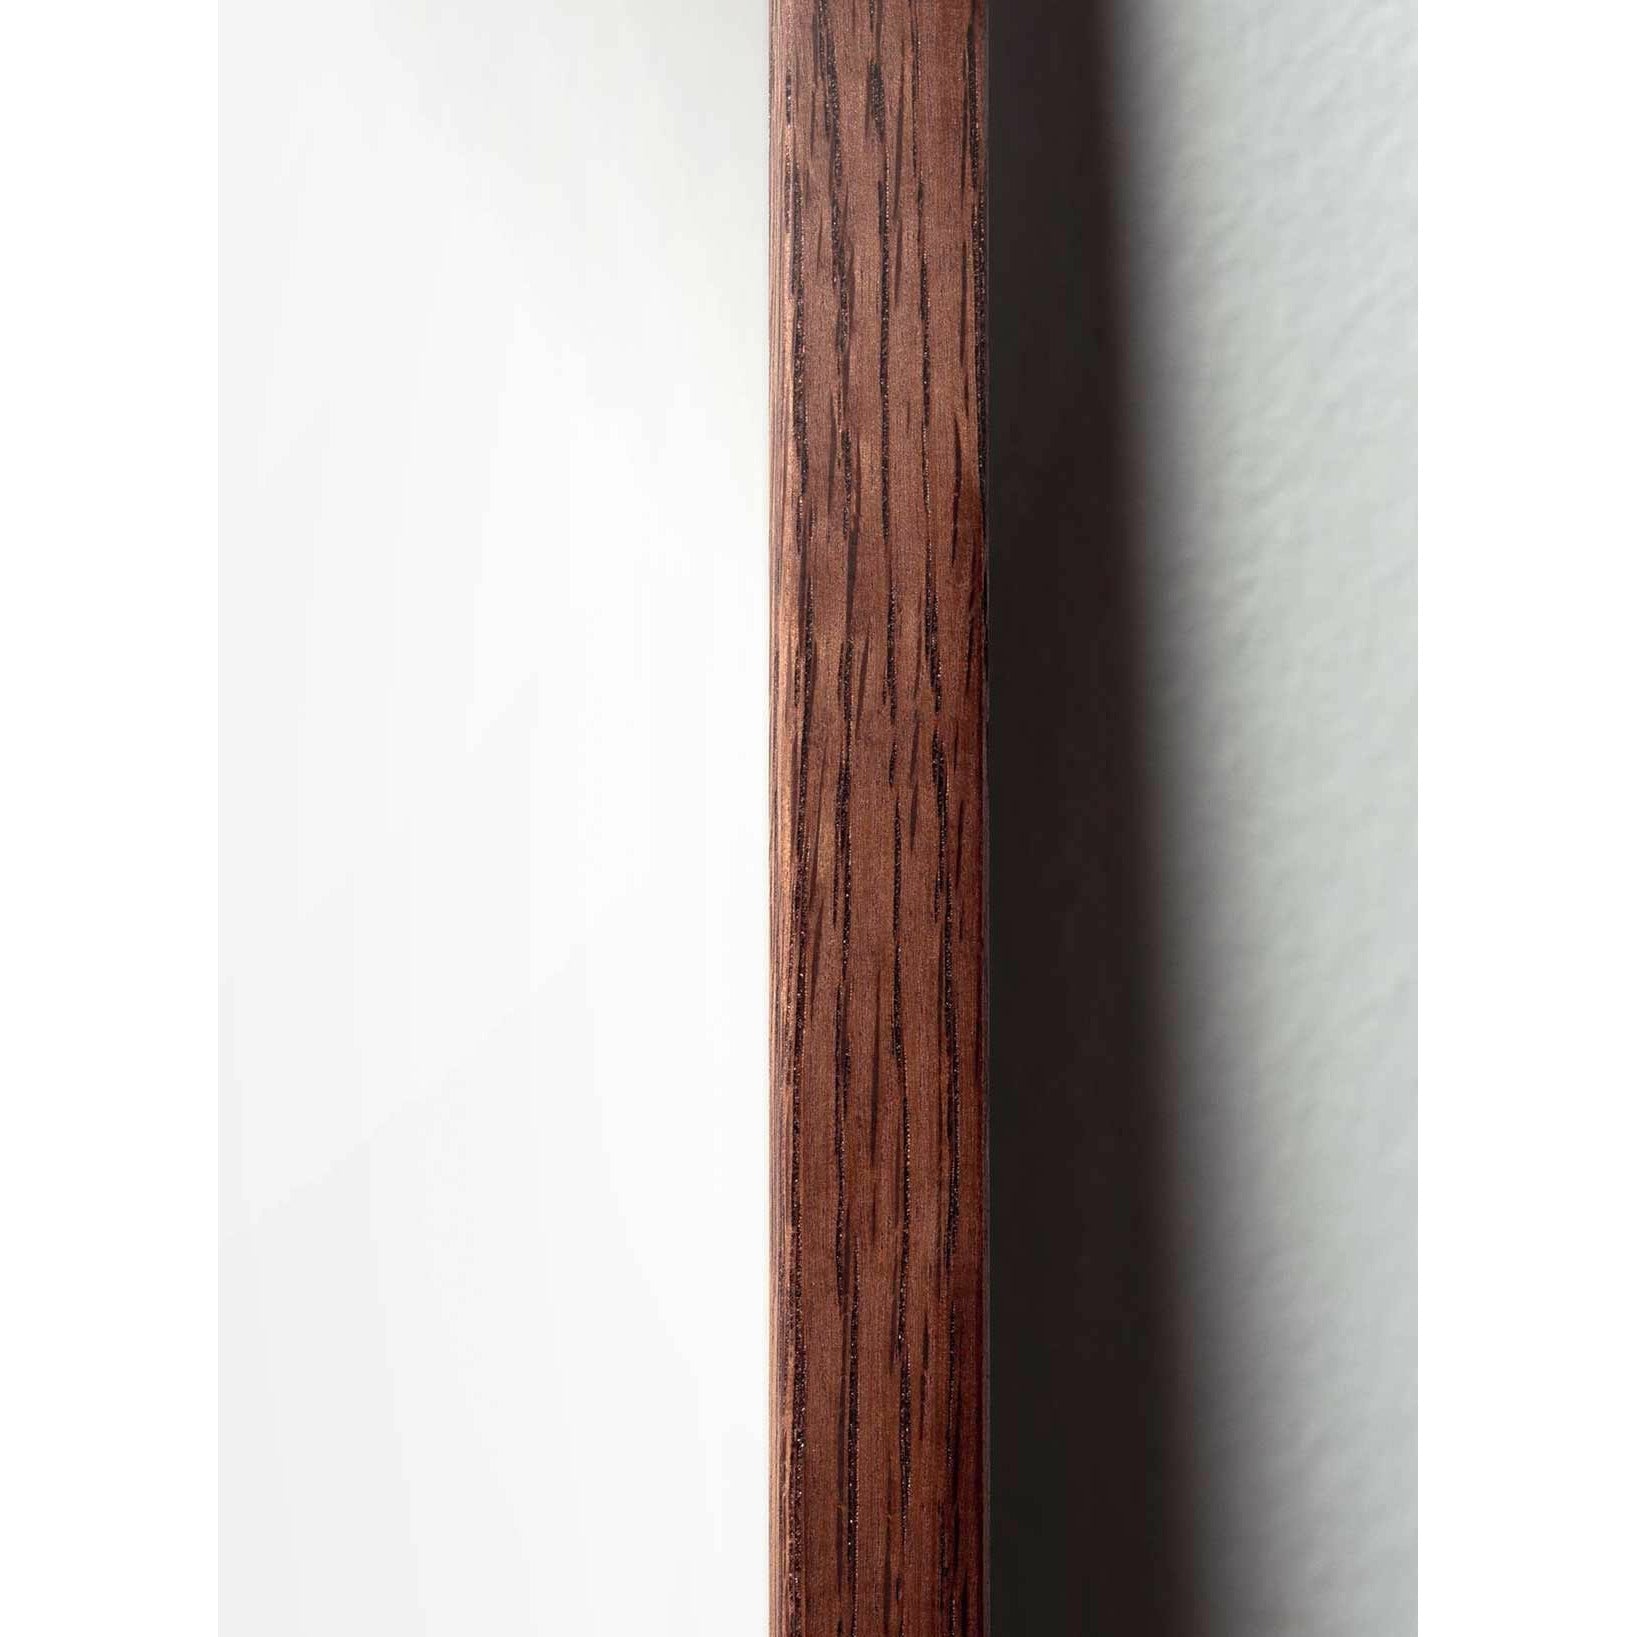 Póster Classic Classic Swan, marco hecho de madera oscura 50x70 cm, fondo negro/negro